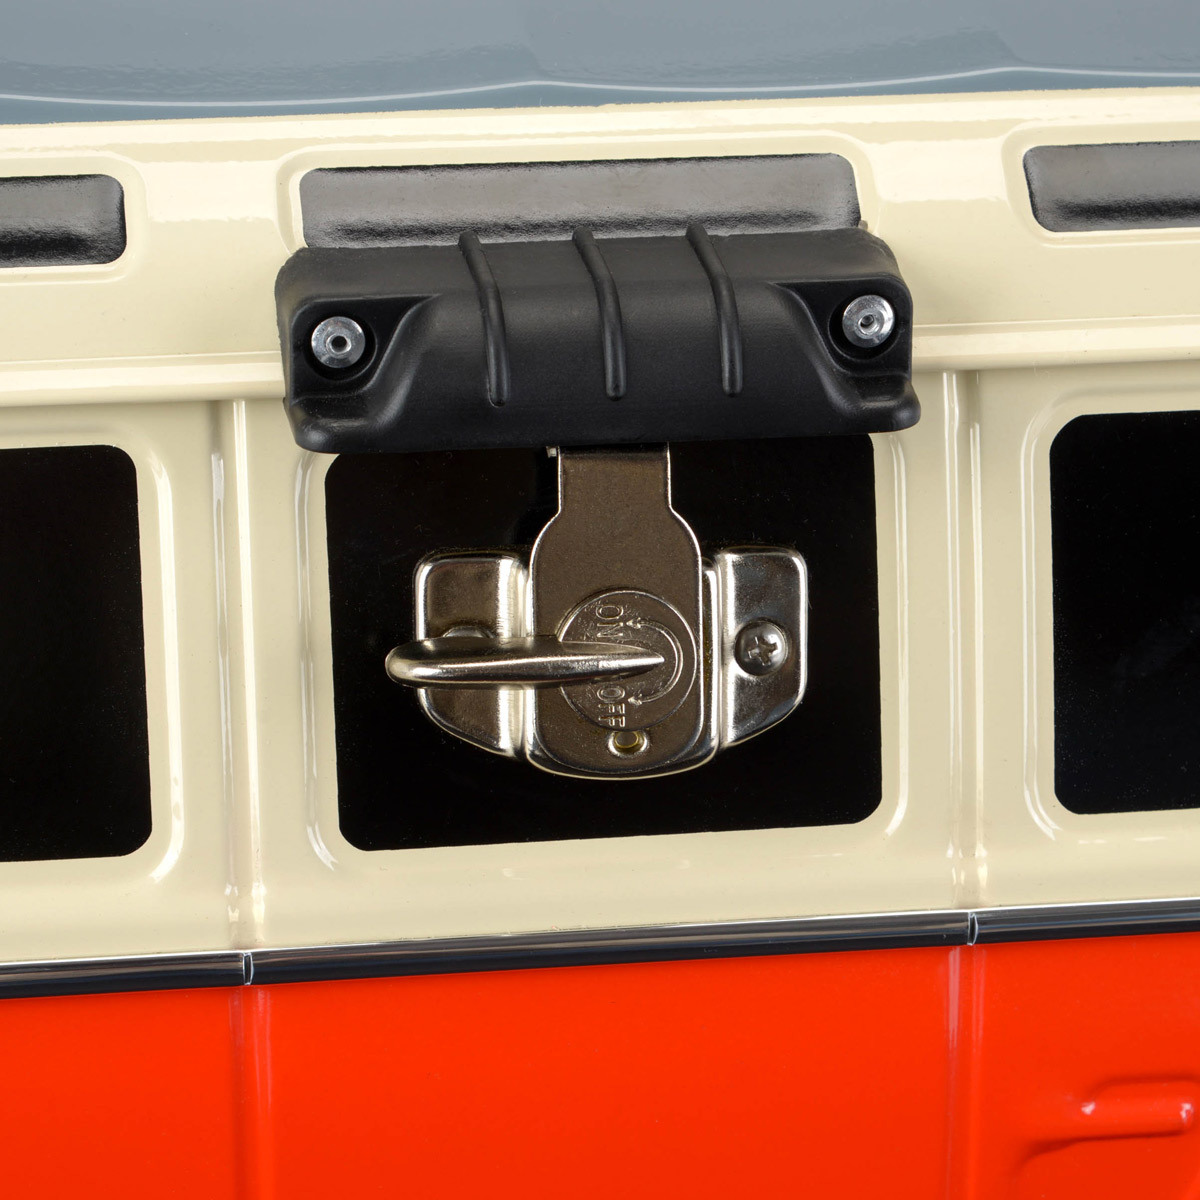 VW Collection - VW T1 Bus - fahrbare Kühlbox - 30 Liter - rot